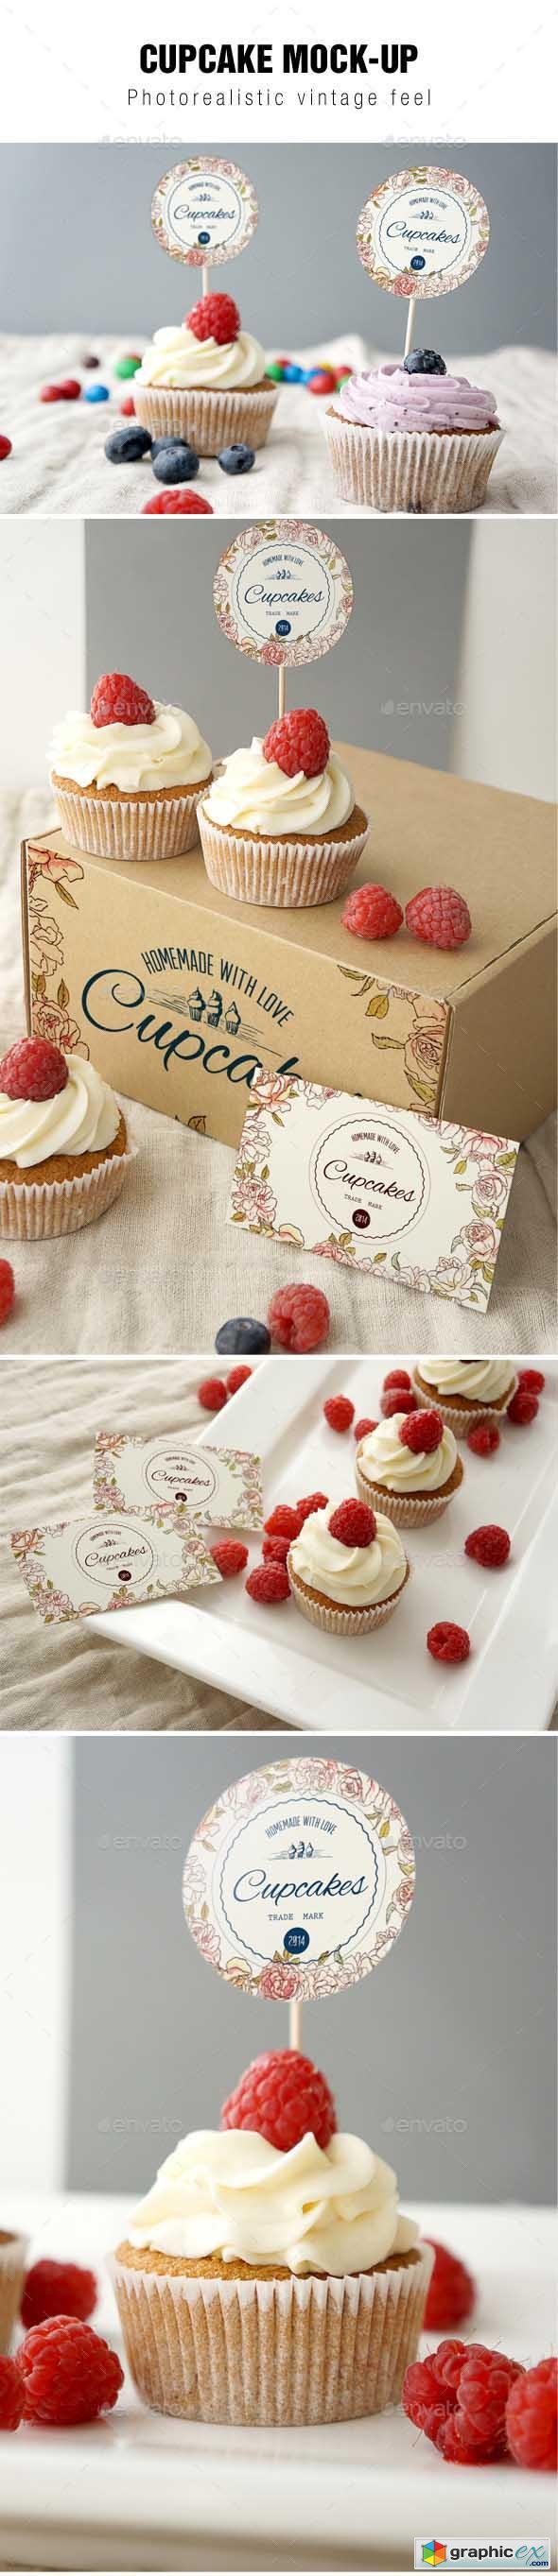 Cupcake Mockup 9206104